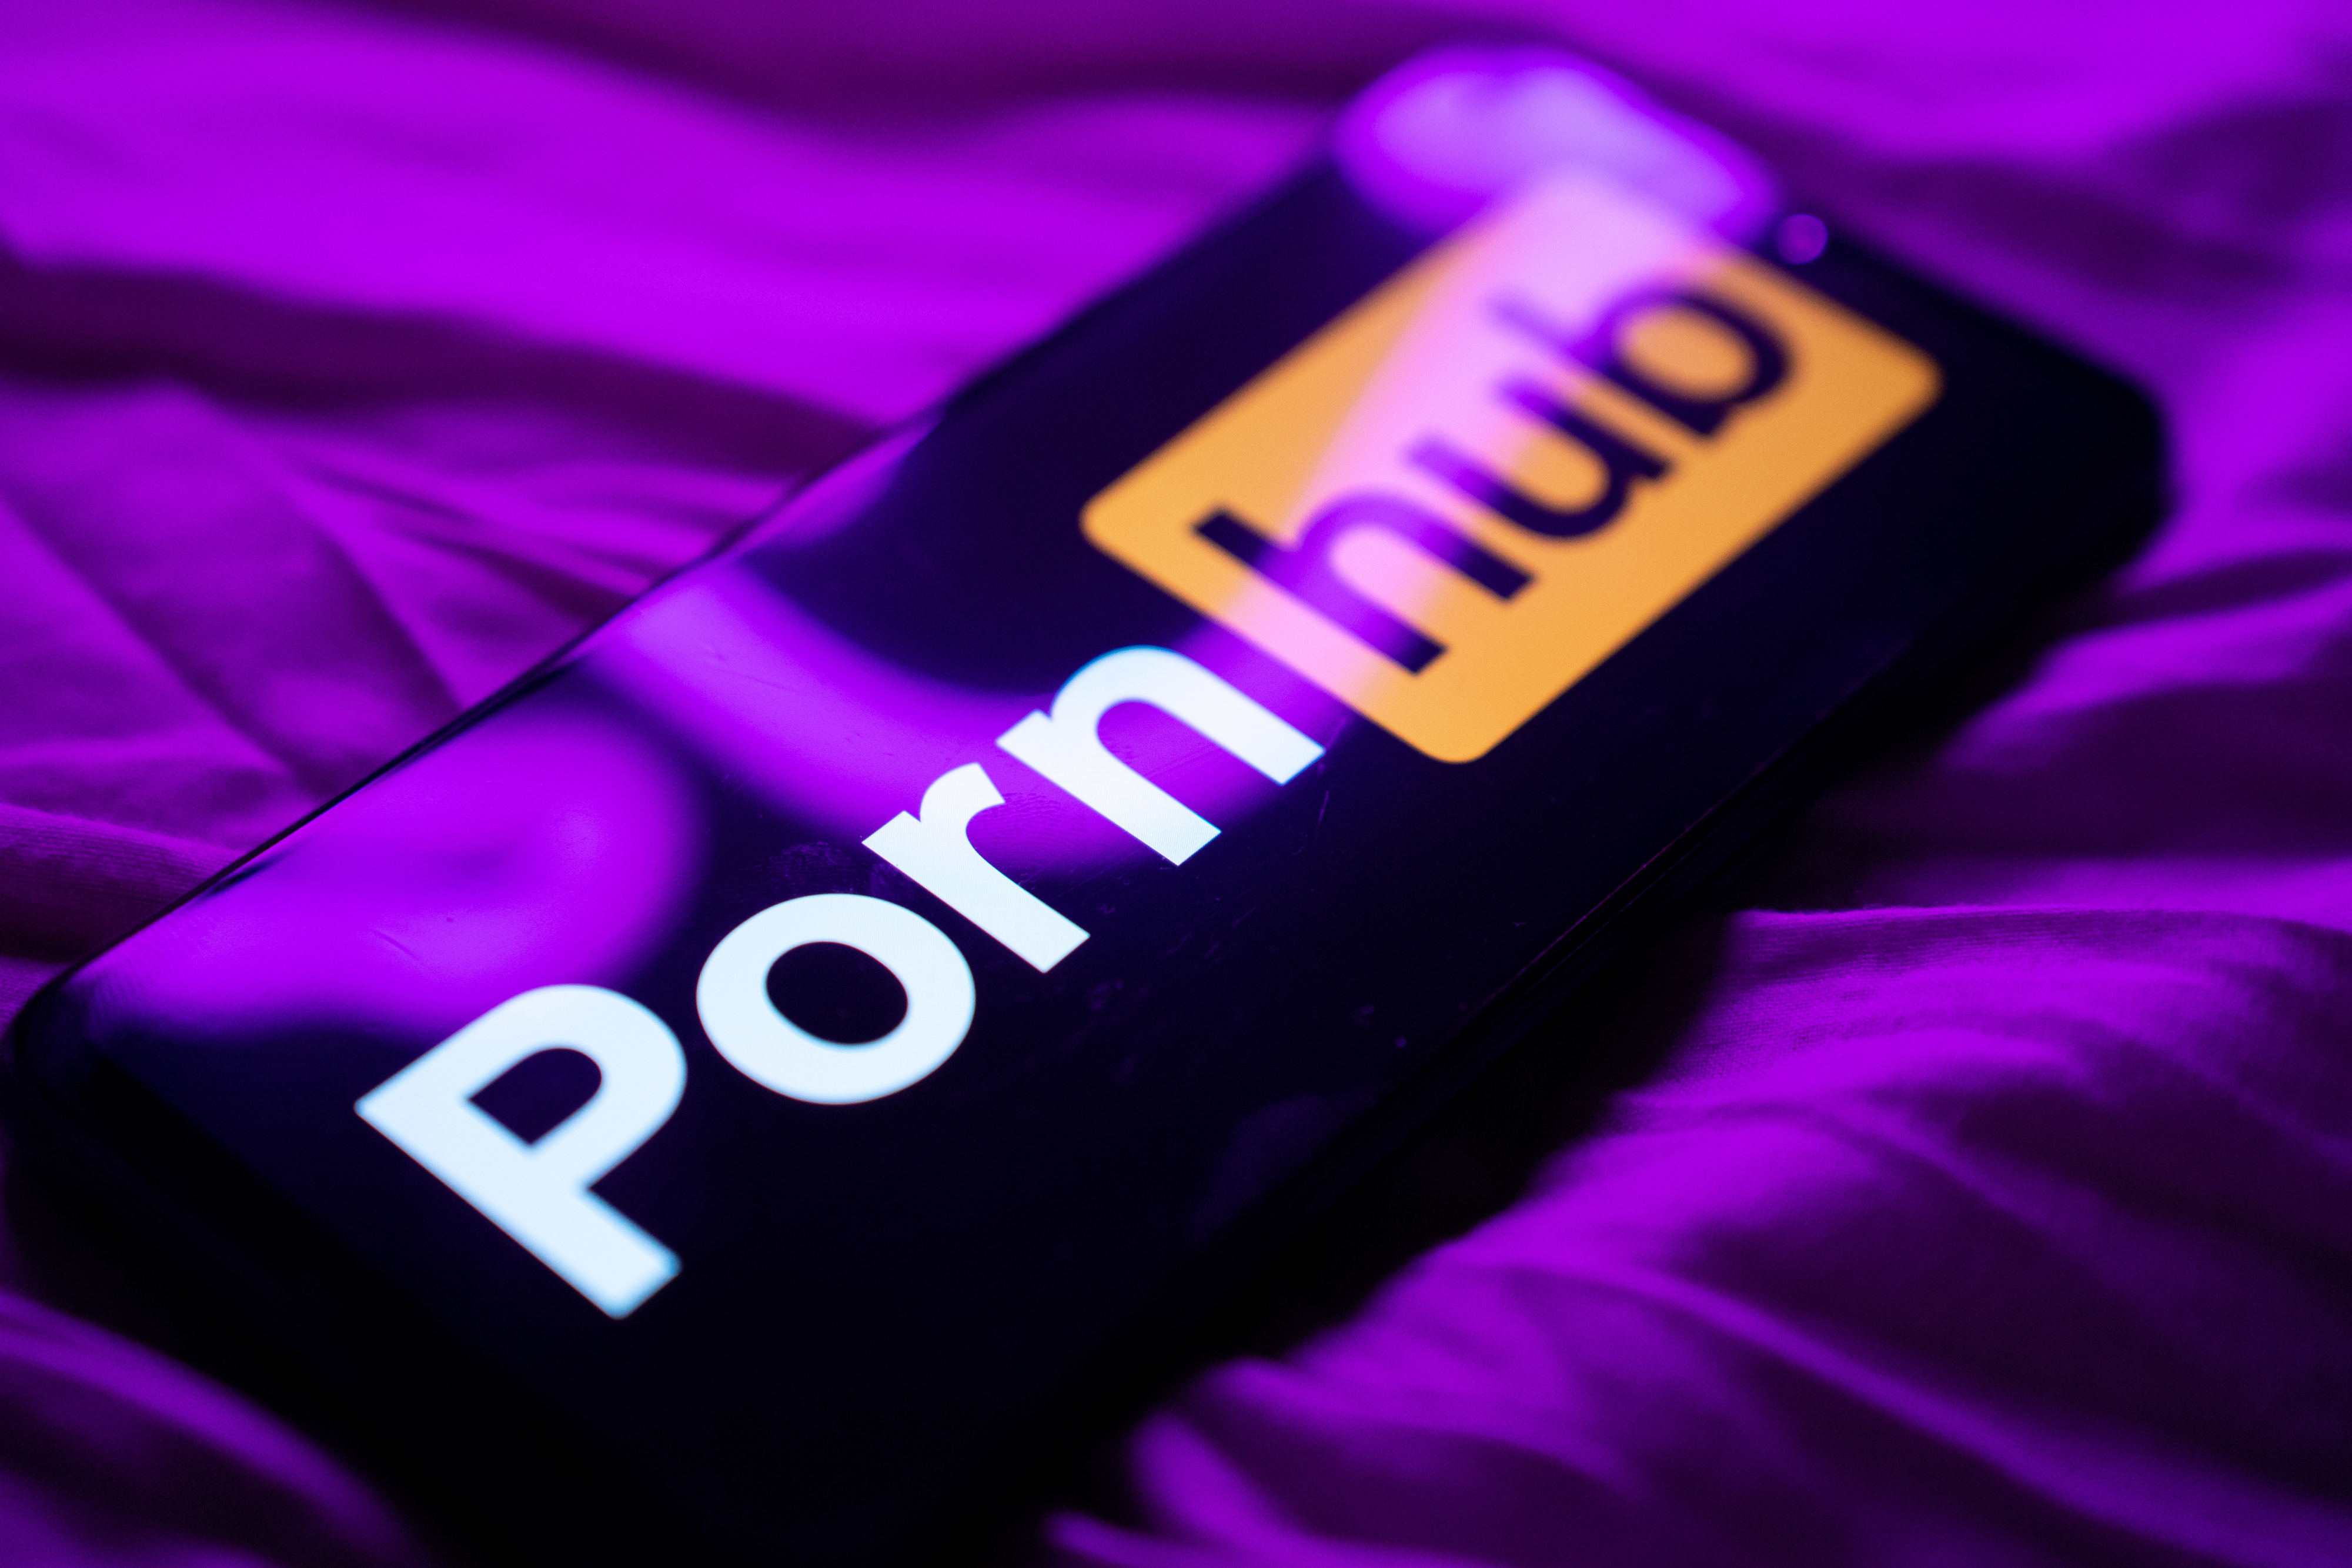 Phone screen displaying Pornhub logo on a surface